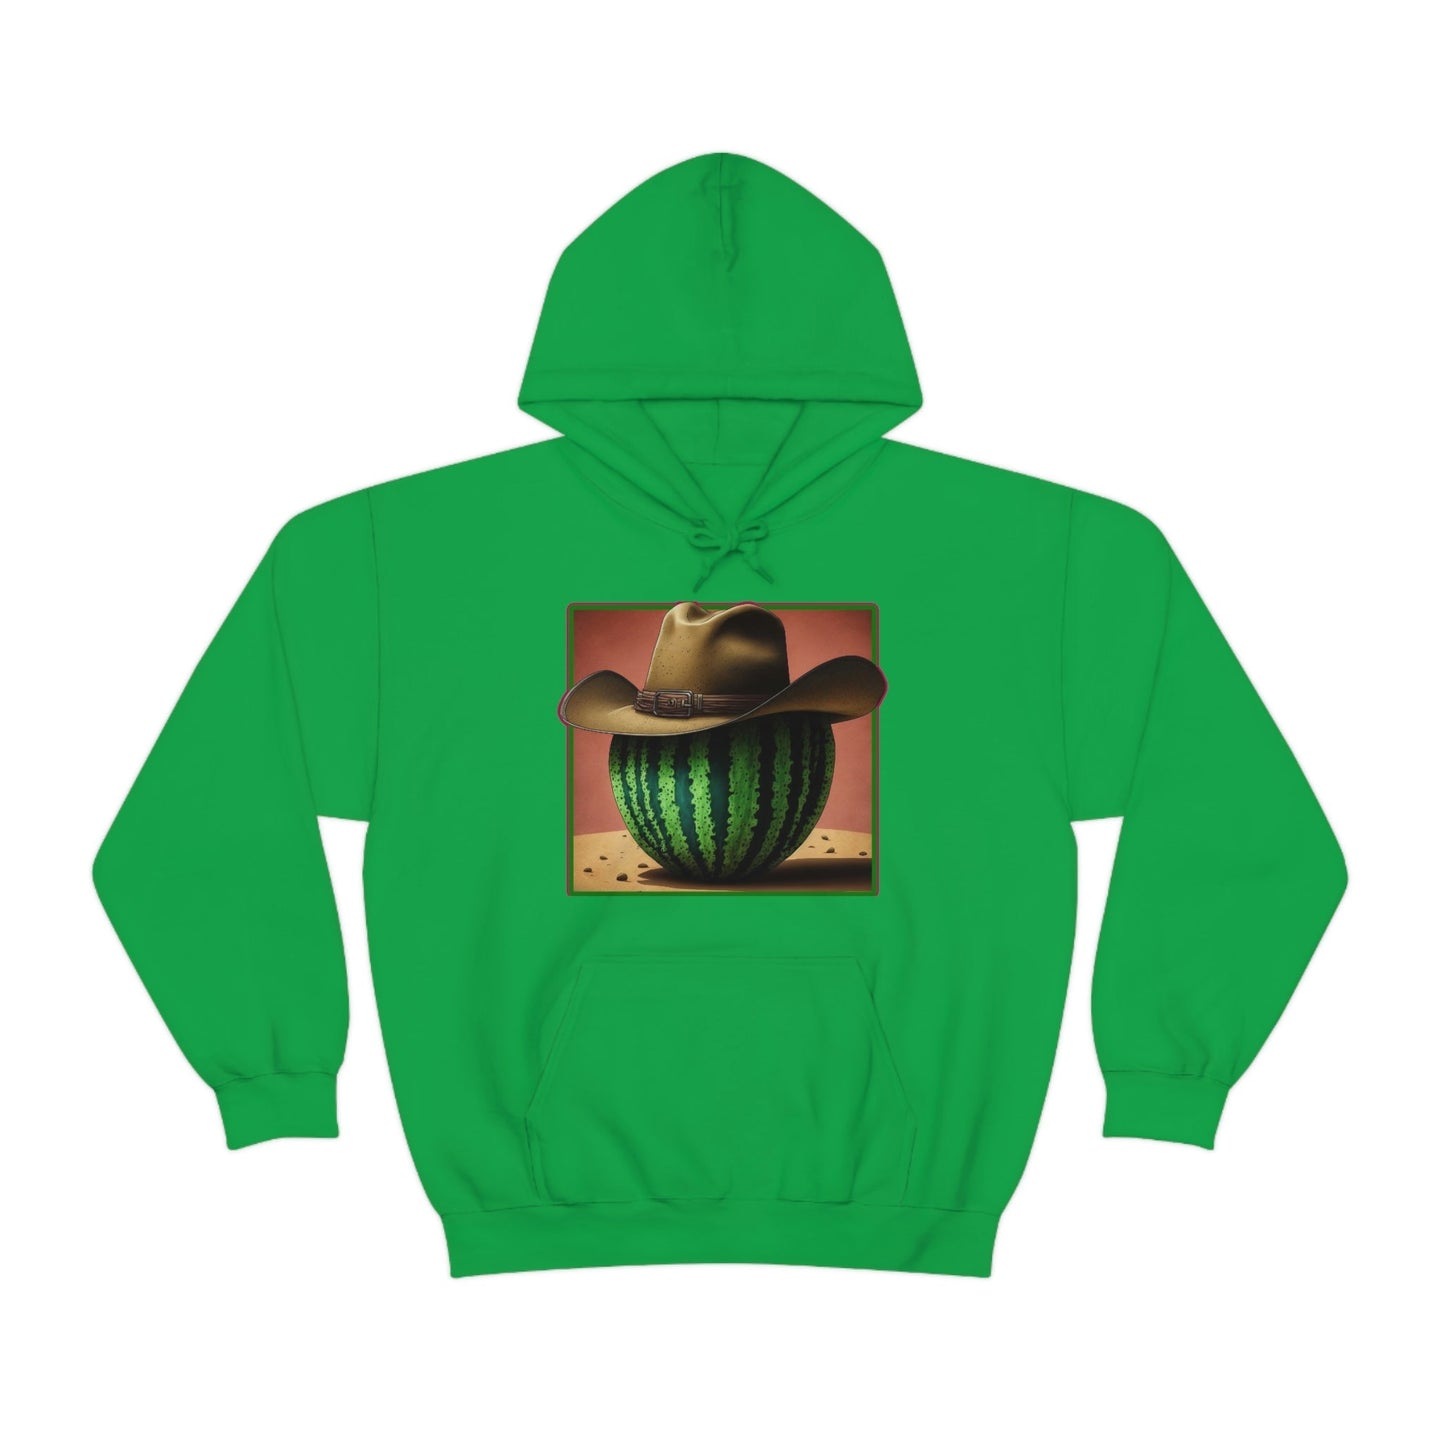 Cowboy Watermelon Hoodie - The Boss - Bind on Equip - 25630038172703333620